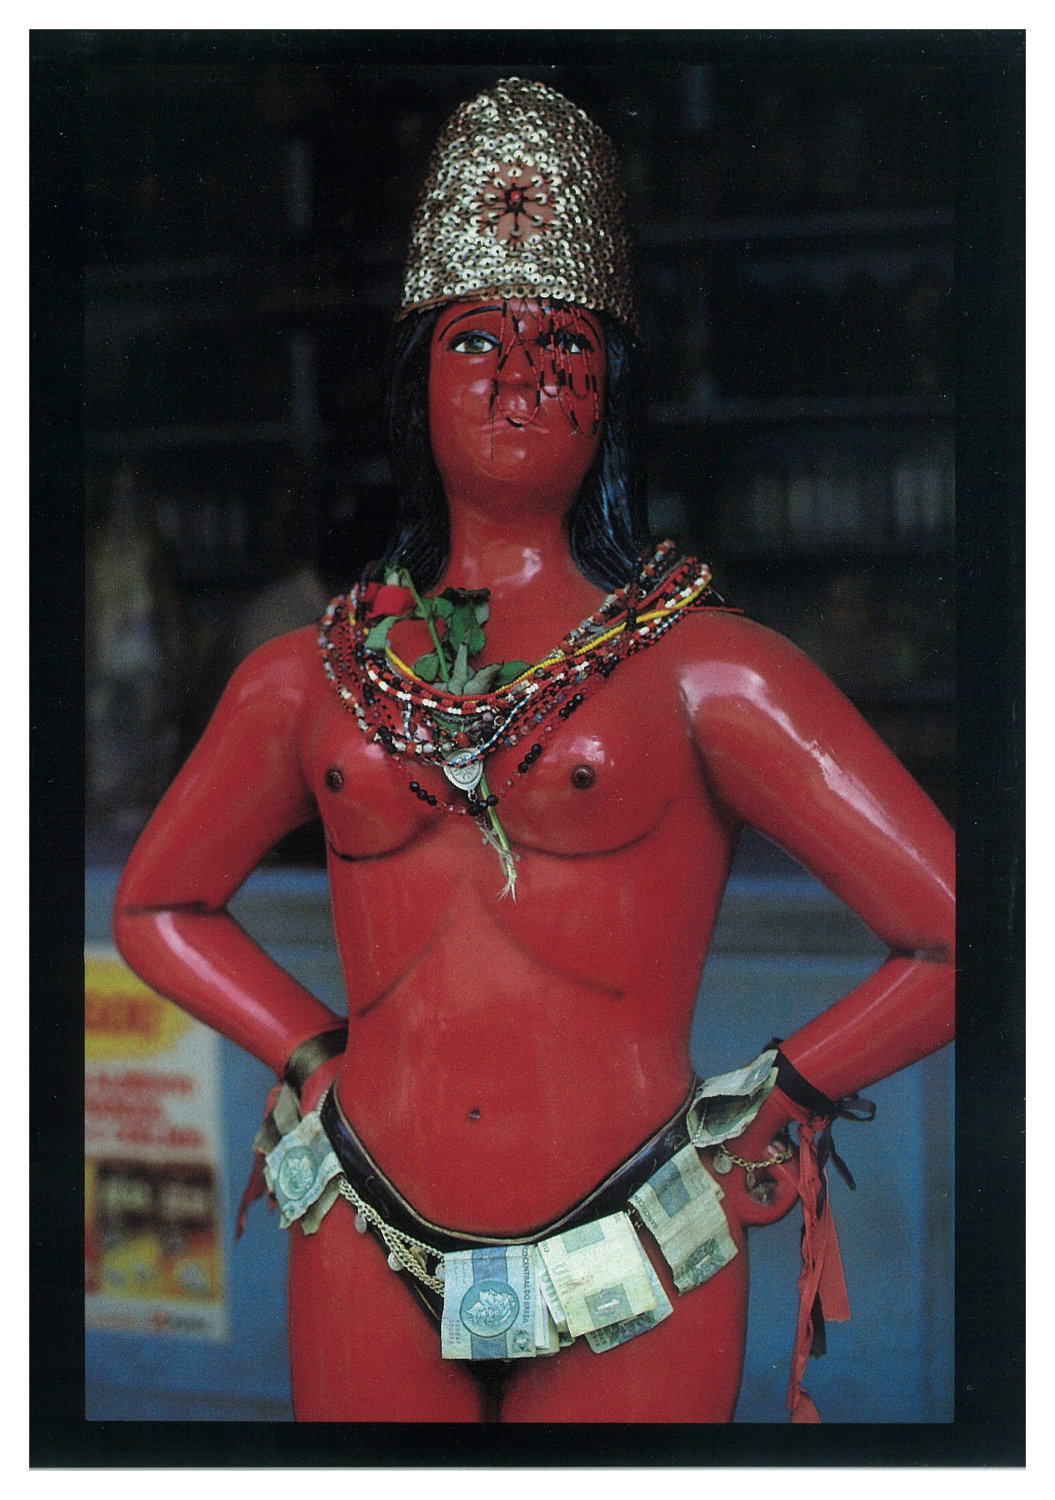 Primary image for Afrobrazilian Umbanda Goddess: Vintage Brazilian Curio Shop Photo Postcard